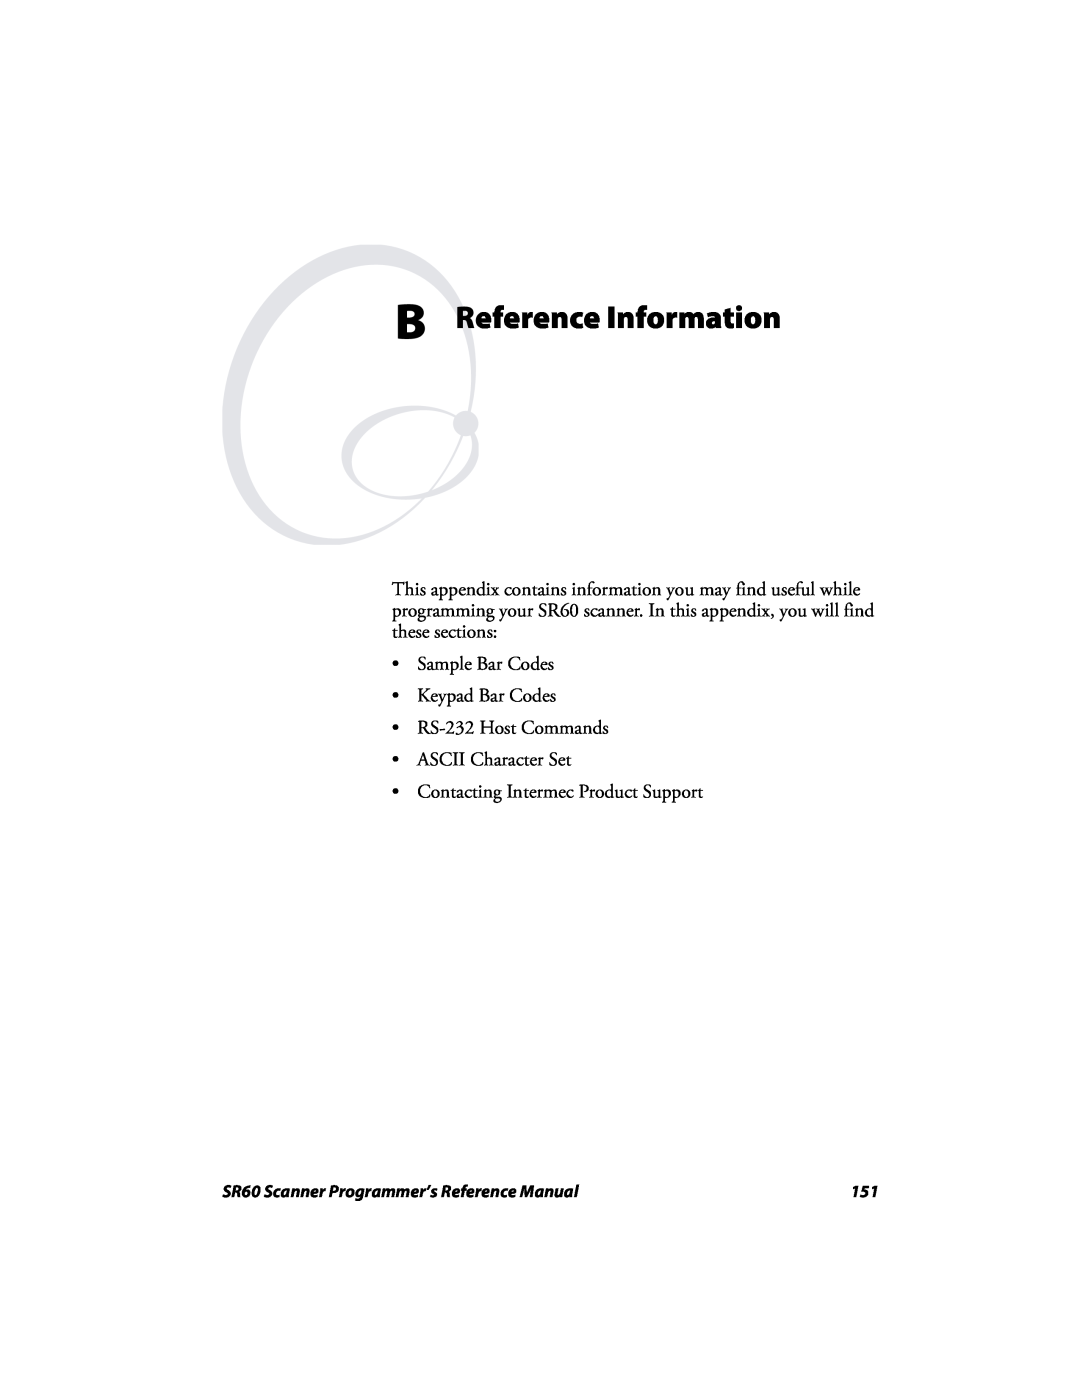 Intermec SR60 manual B Reference Information, Sample Bar Codes Keypad Bar Codes RS-232 Host Commands 